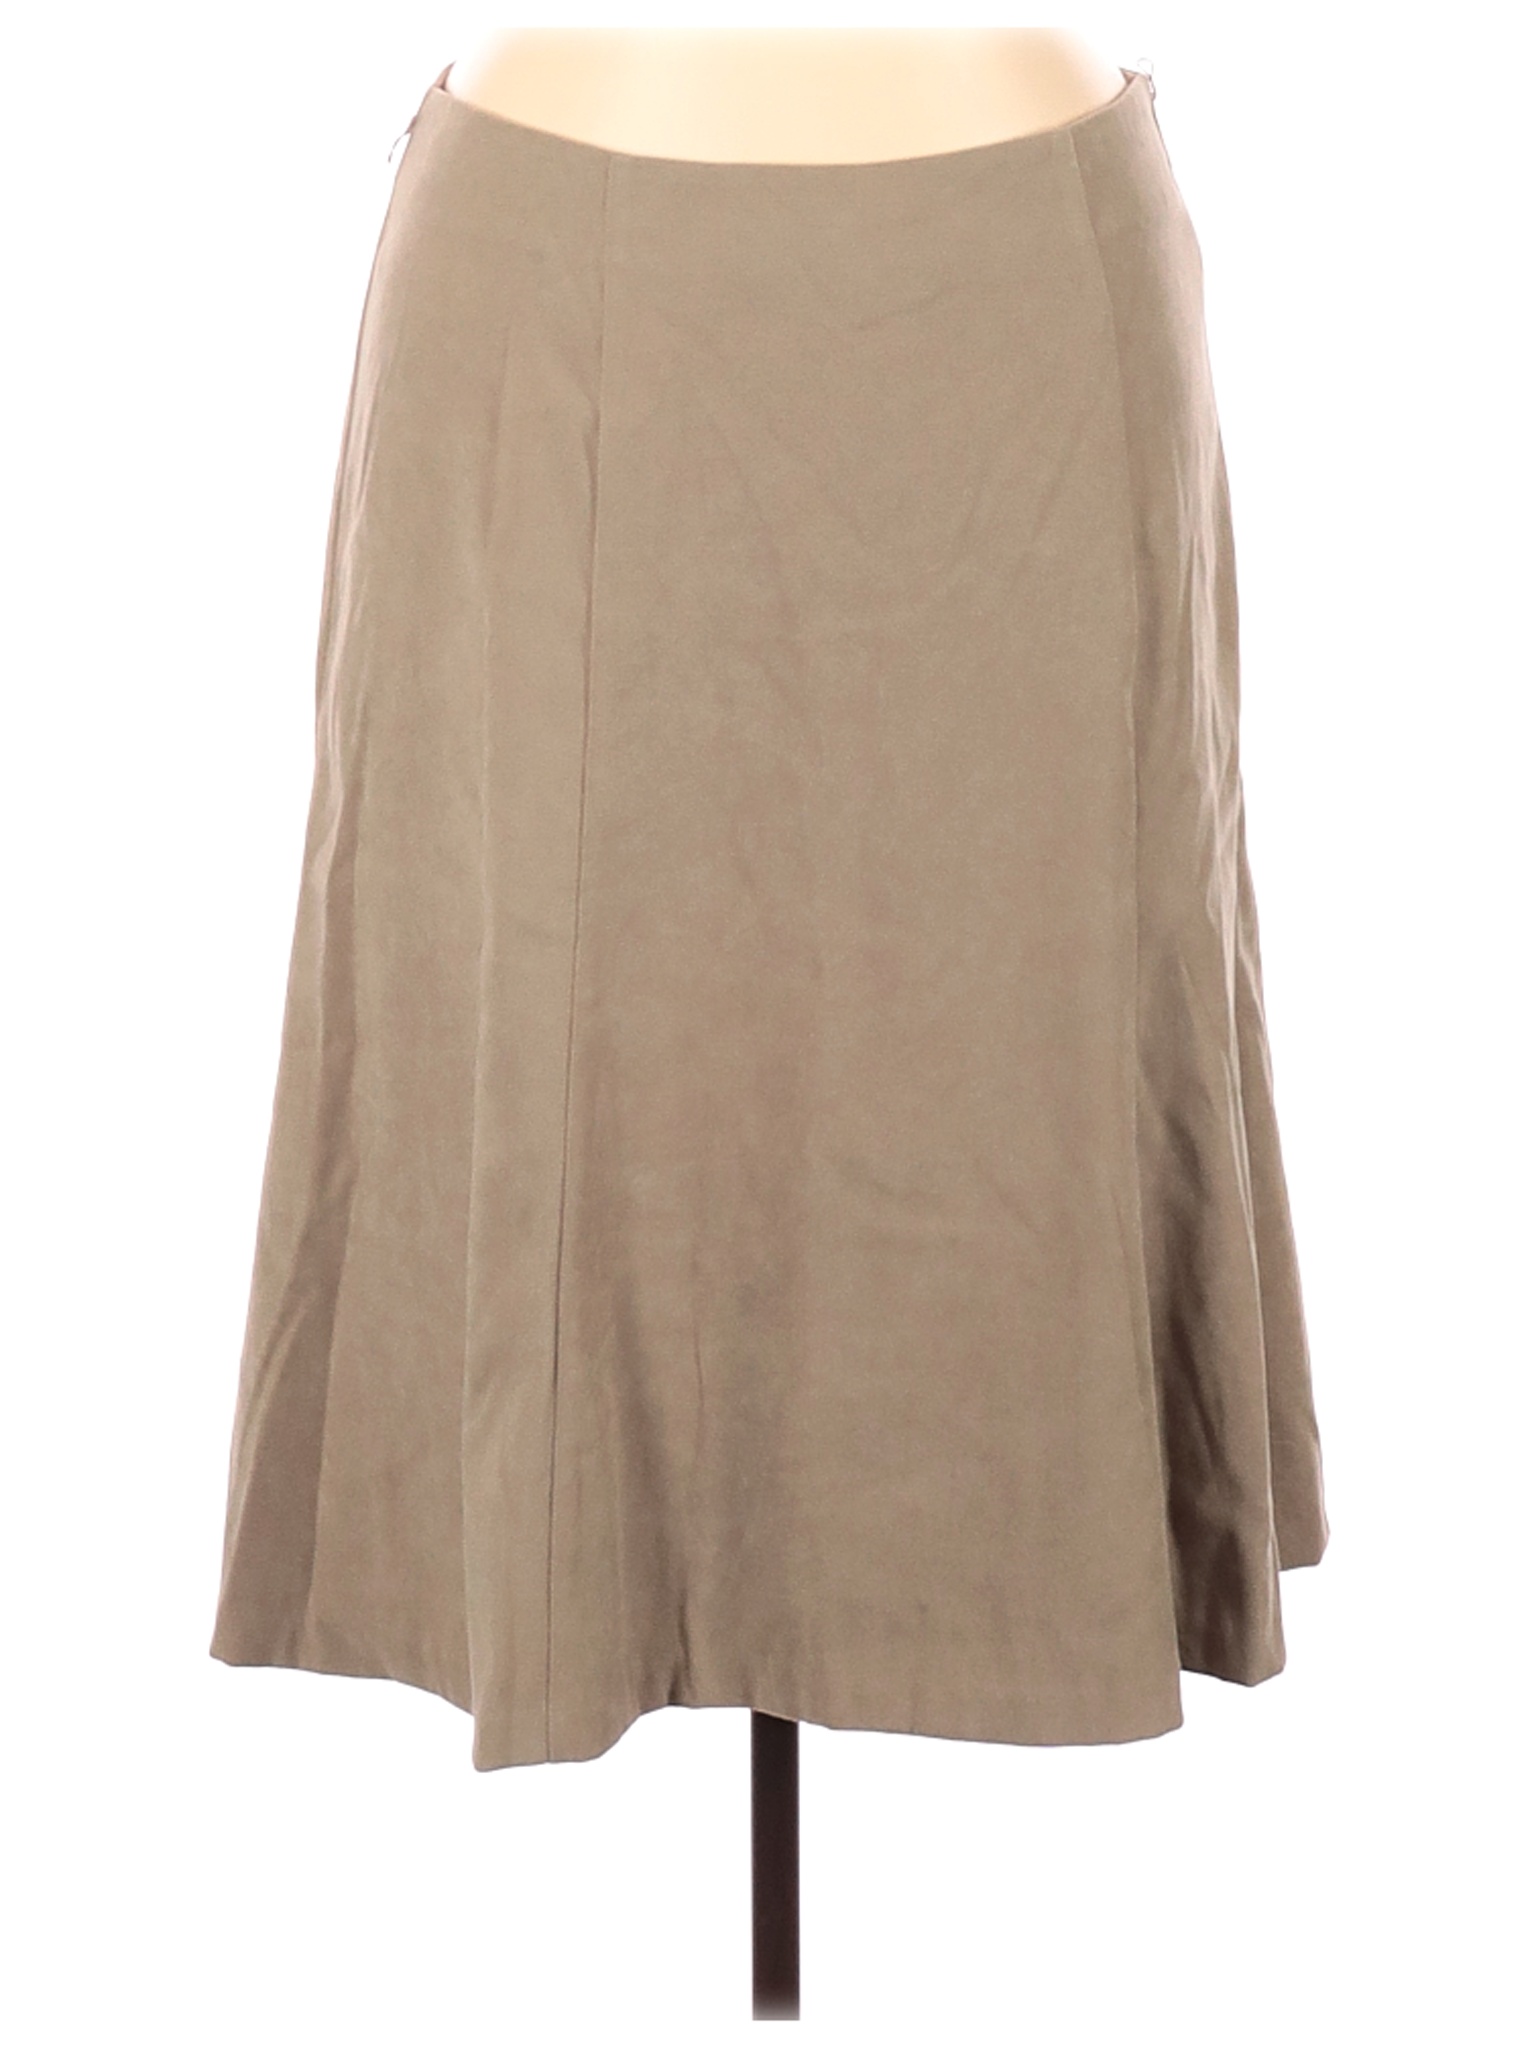 New York Clothing Co. Women Brown Casual Skirt 16 | eBay